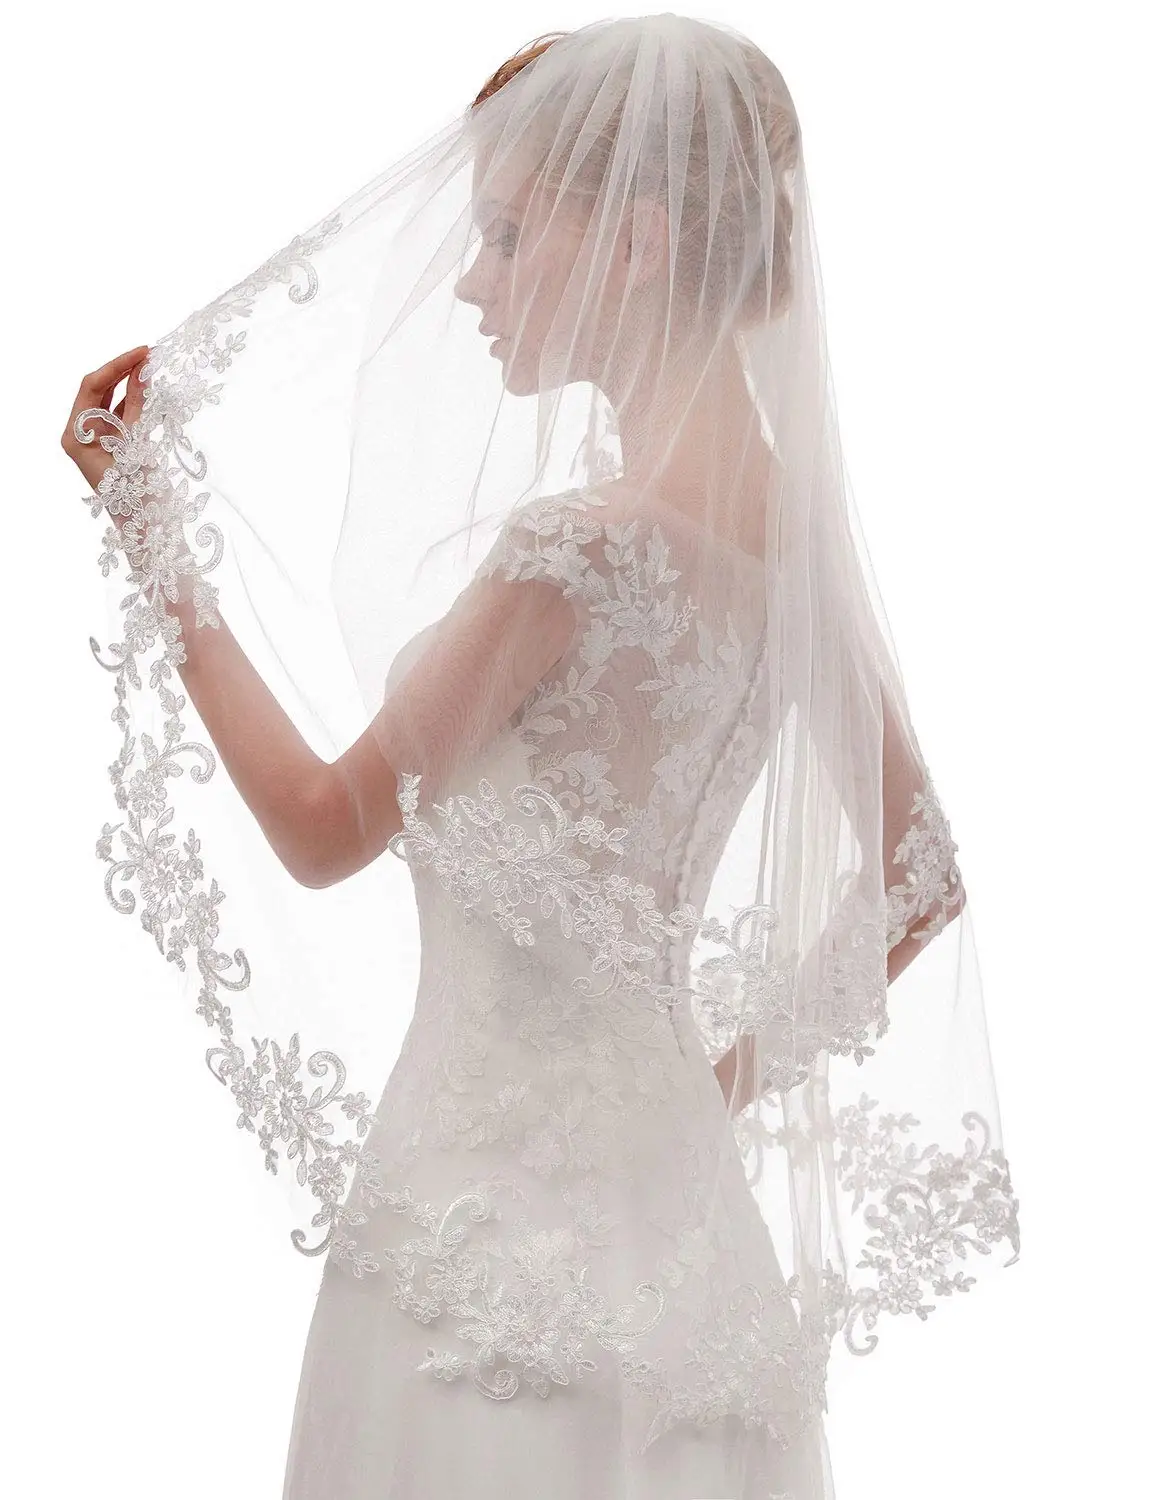 

Top Sale Newly Designed Wedding Lace Veil Short Sparkle Waist Veils 2 Tier Soft Tulle Bridal Veils with Comb